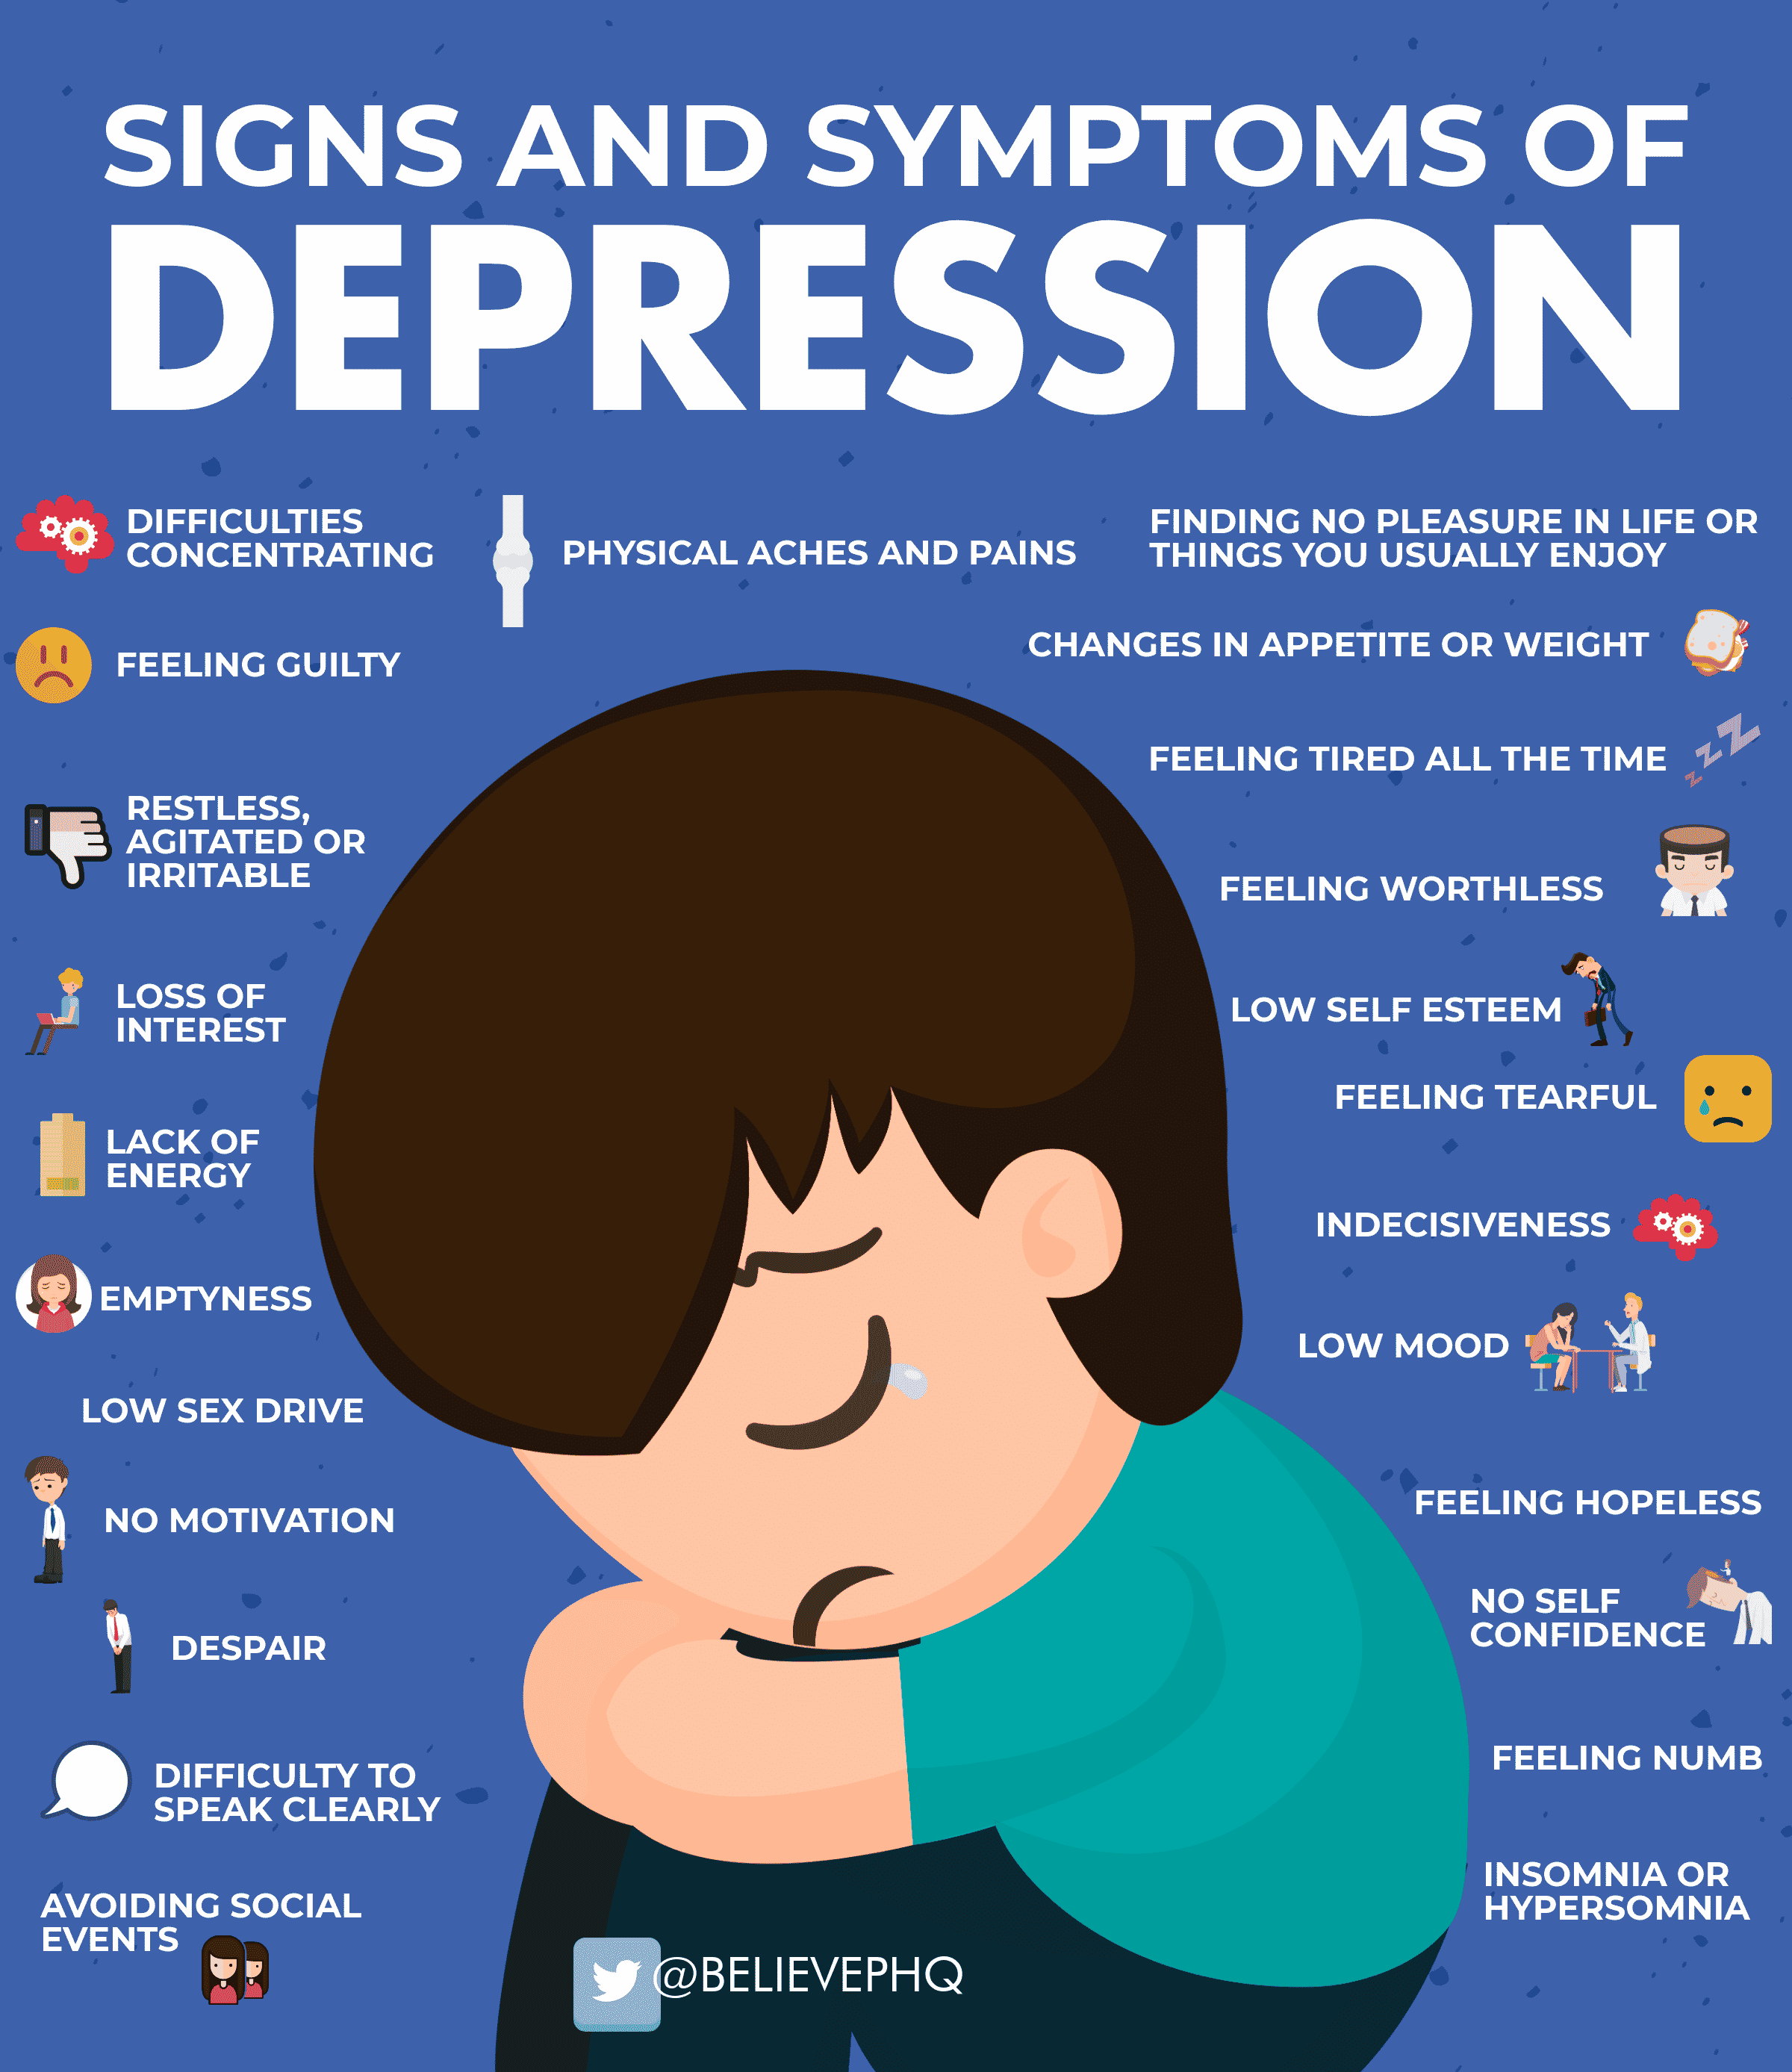 lakeusdesign: Anxiety Depression Symptoms Nhs